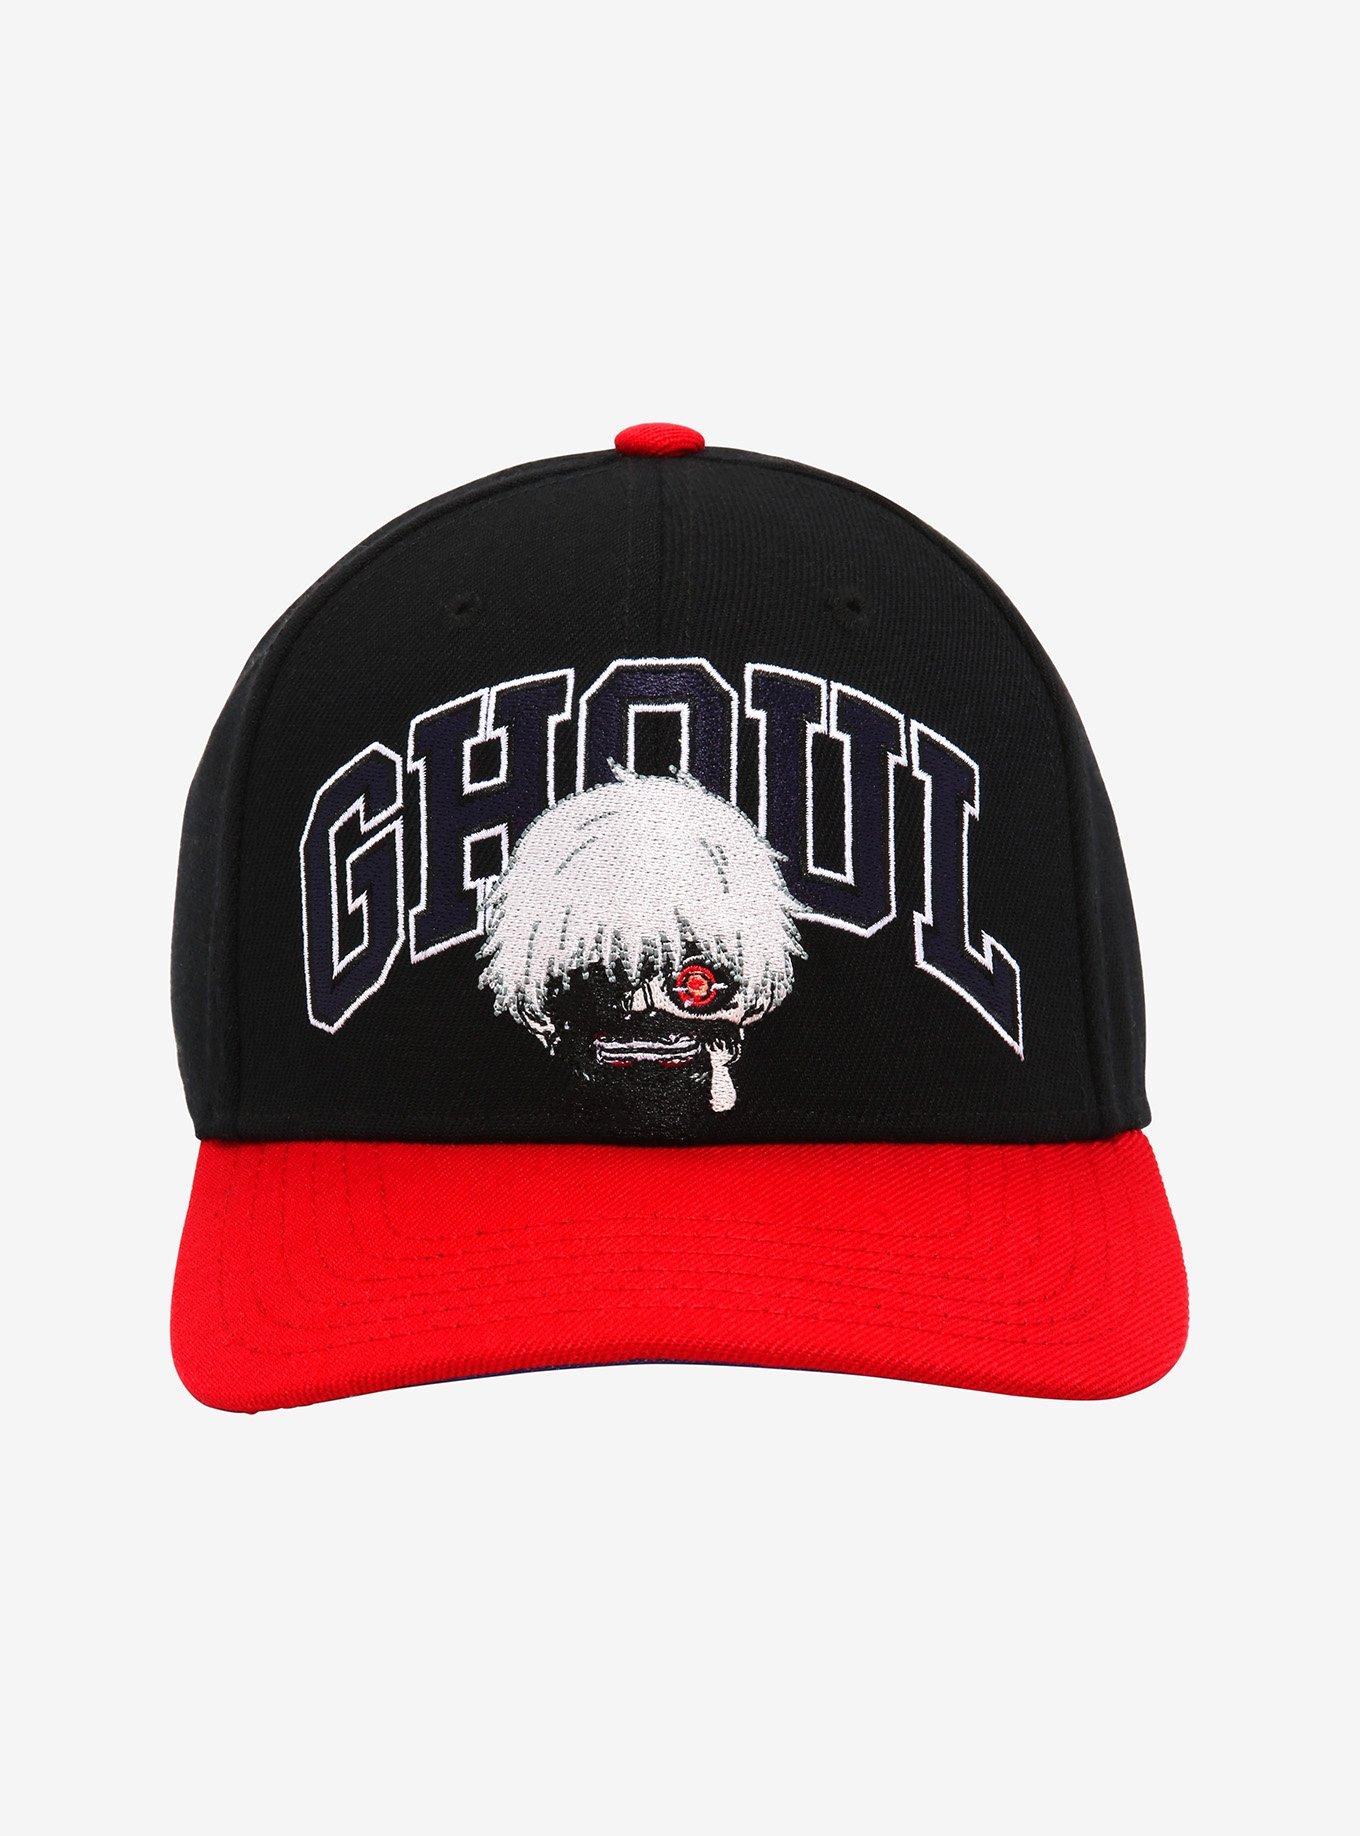 Tokyo Ghoul Chibi Snapback Hat, , alternate